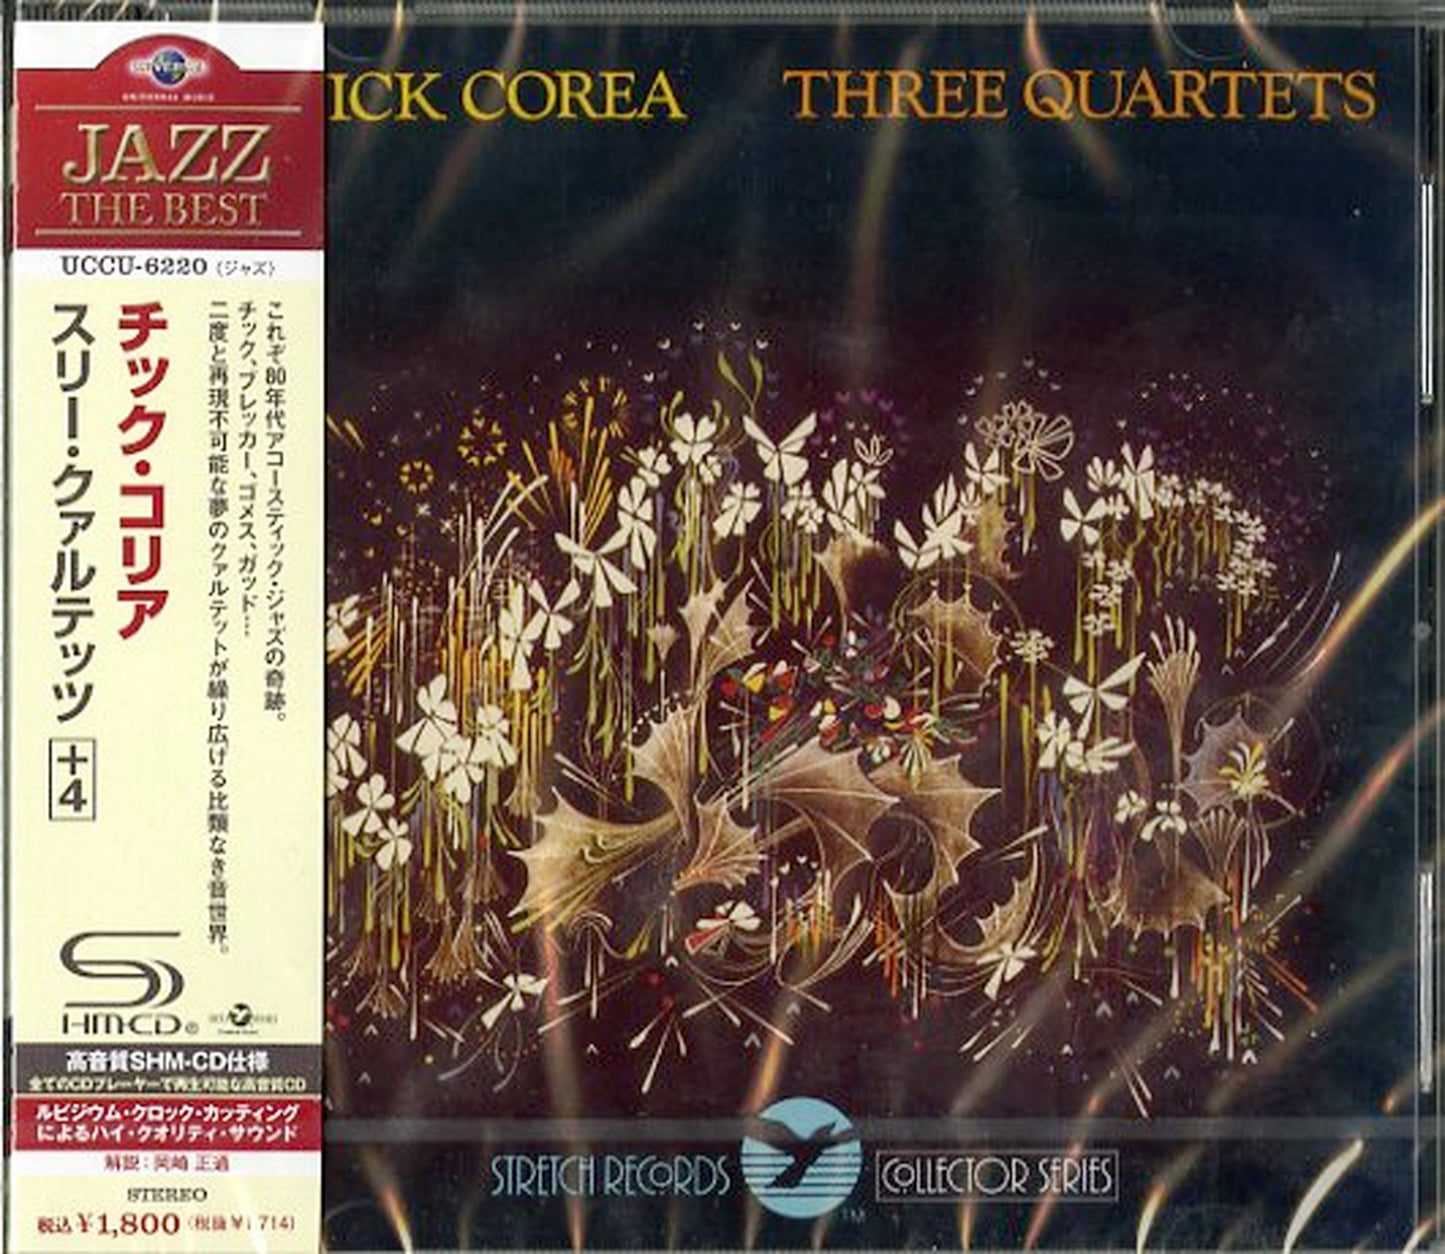 Chick Corea - Three Quartets +4 - Japan  SHM-CD Bonus Track